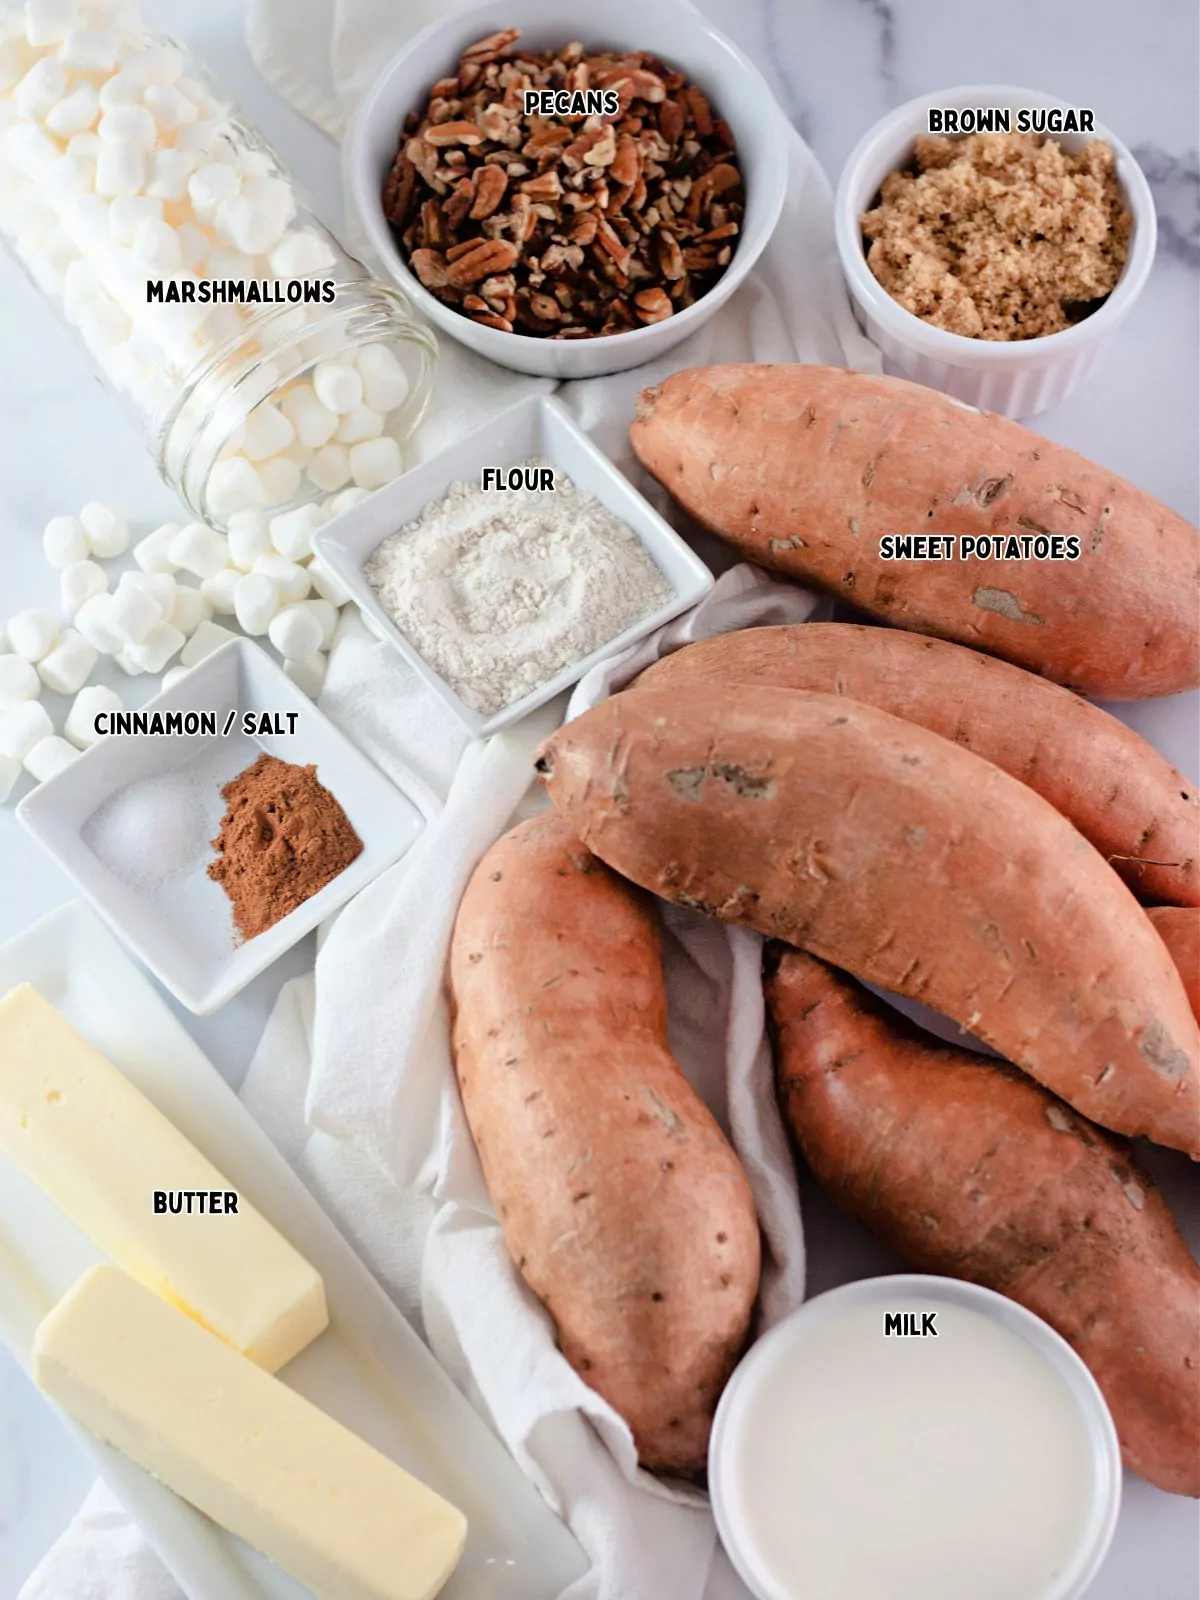 Ingredients for sweet potato casserole.